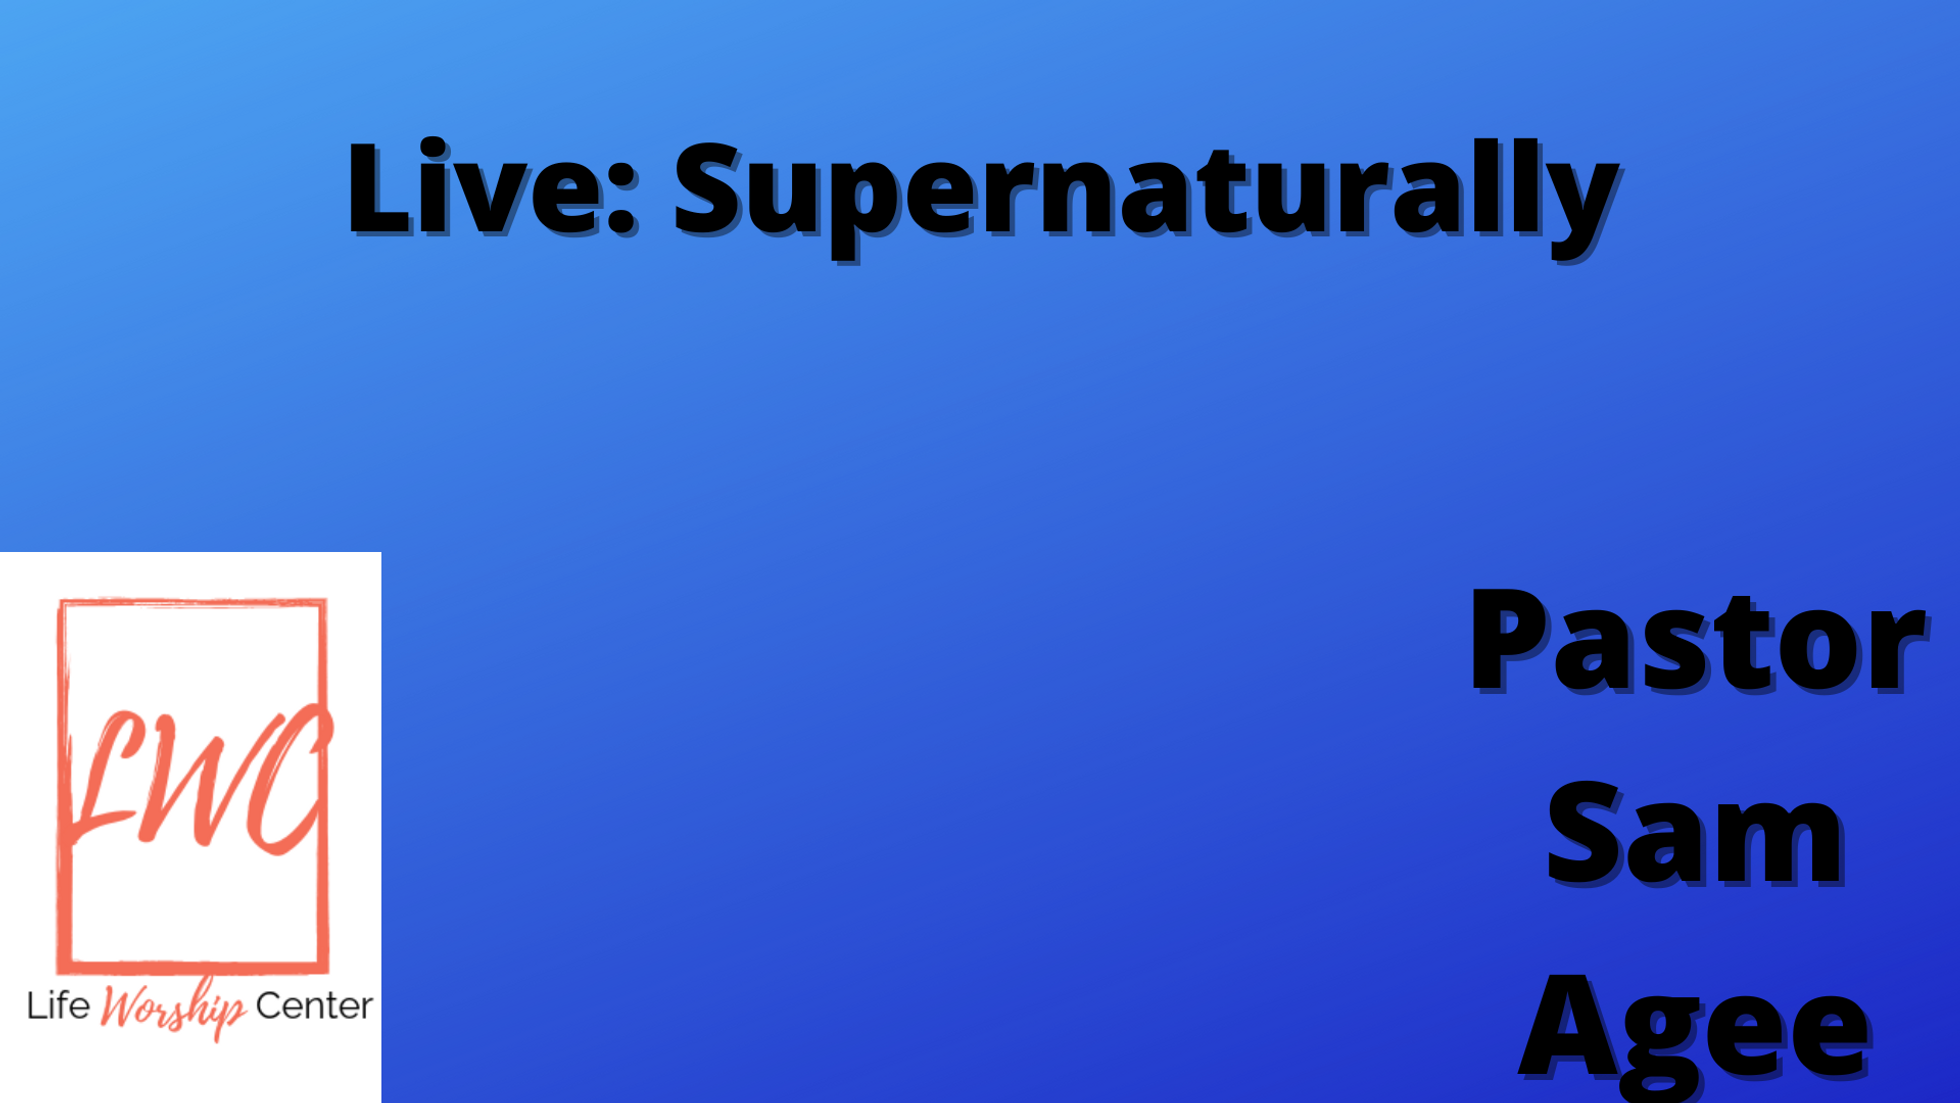 Live: Supernaturally